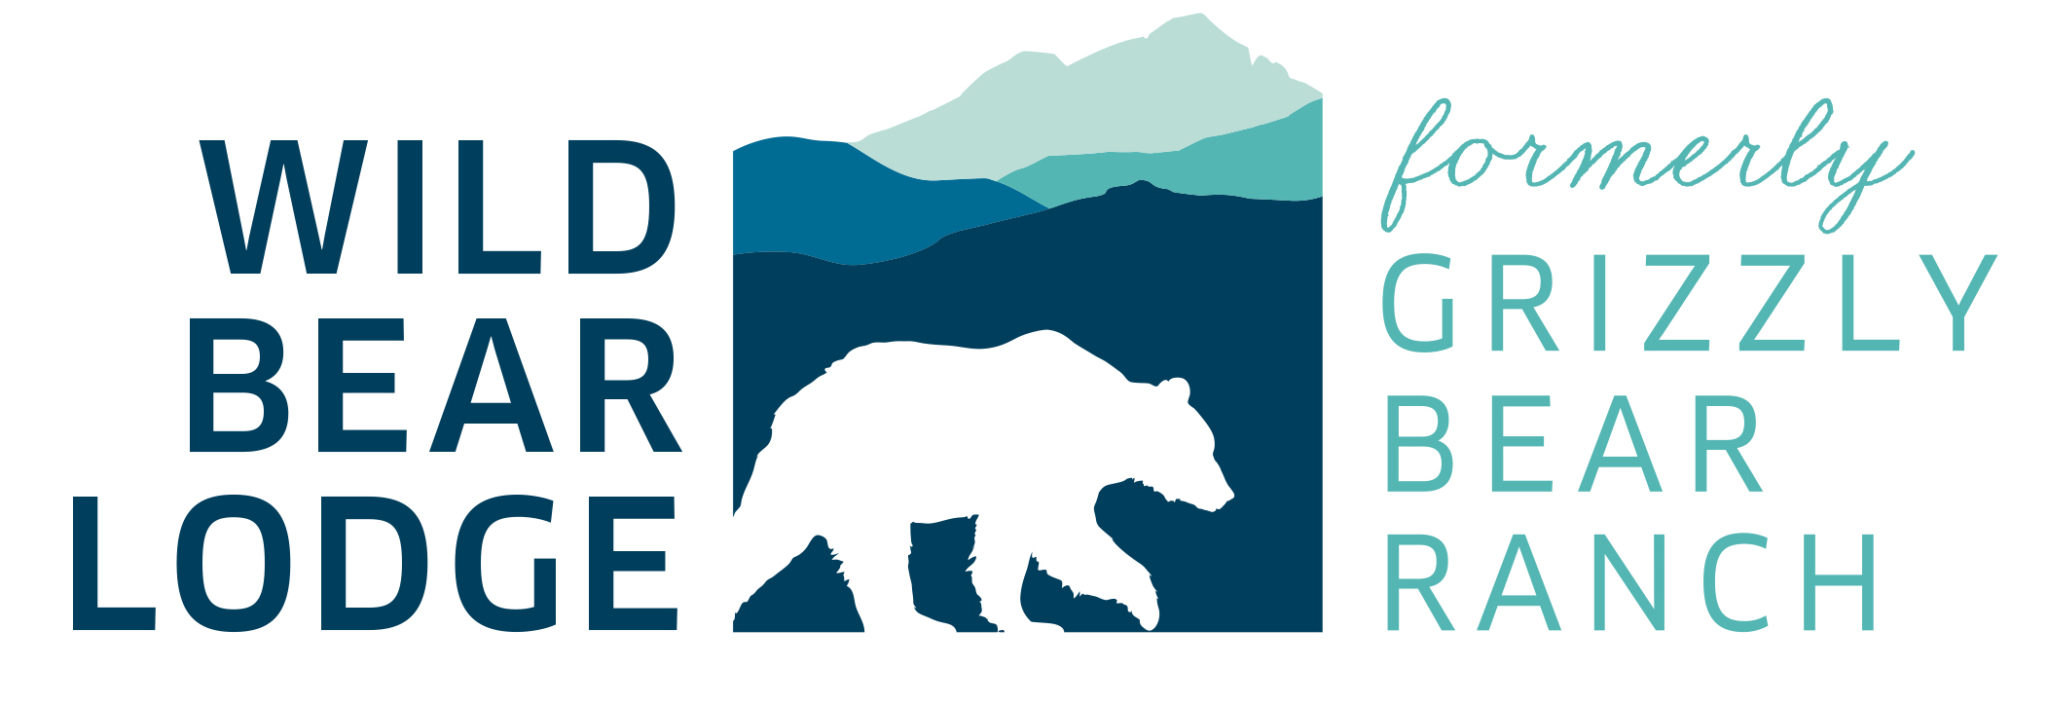 Wild Bear Lodge transition logo